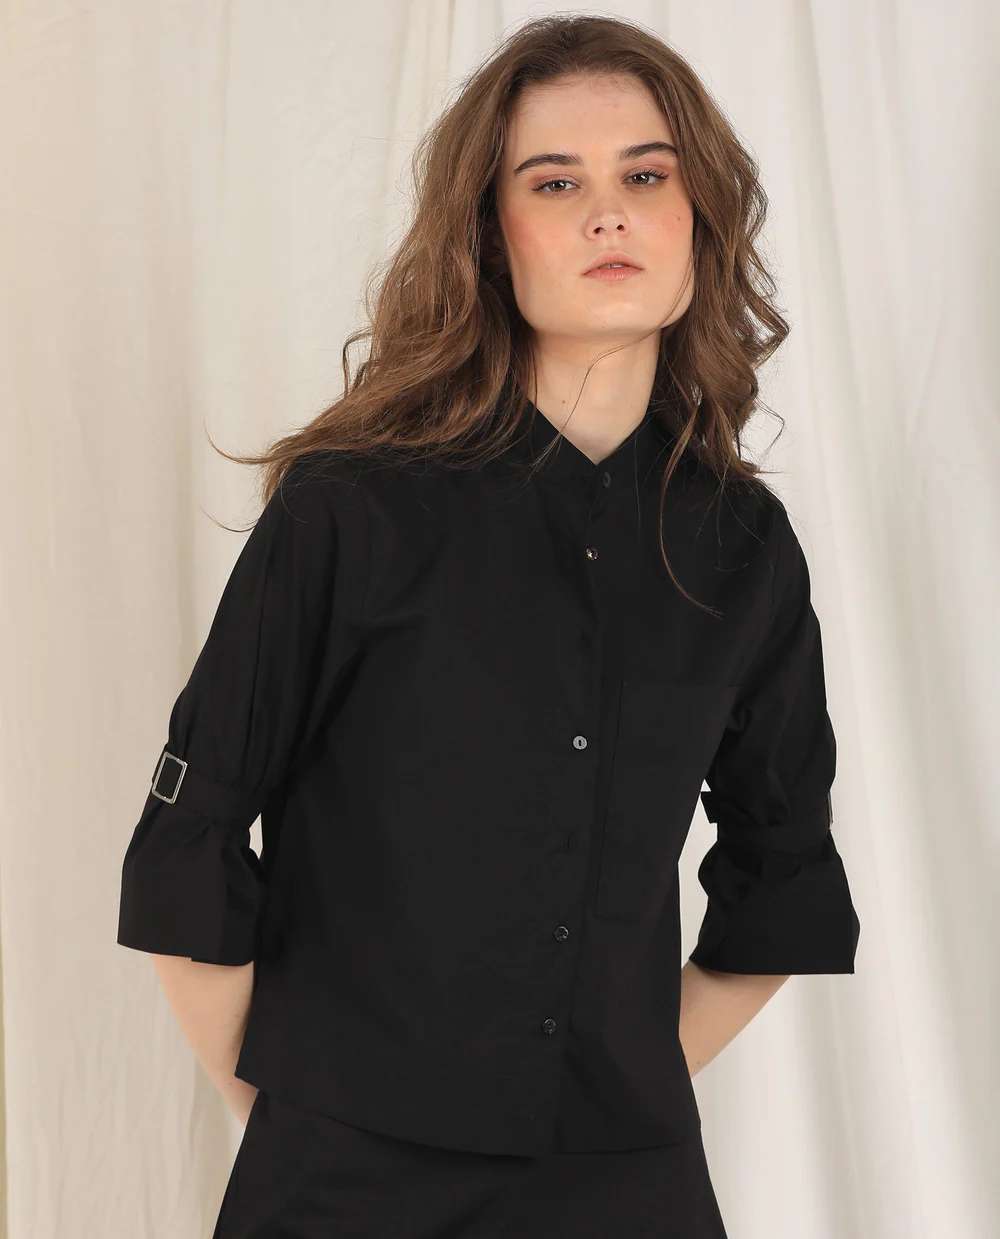 WOMENS SENDAI BLACK TOP POLY LYCRA FABRIC REGULAR FIT HALF SLEEVE COLLARED NECK Surat wholesale western apparel